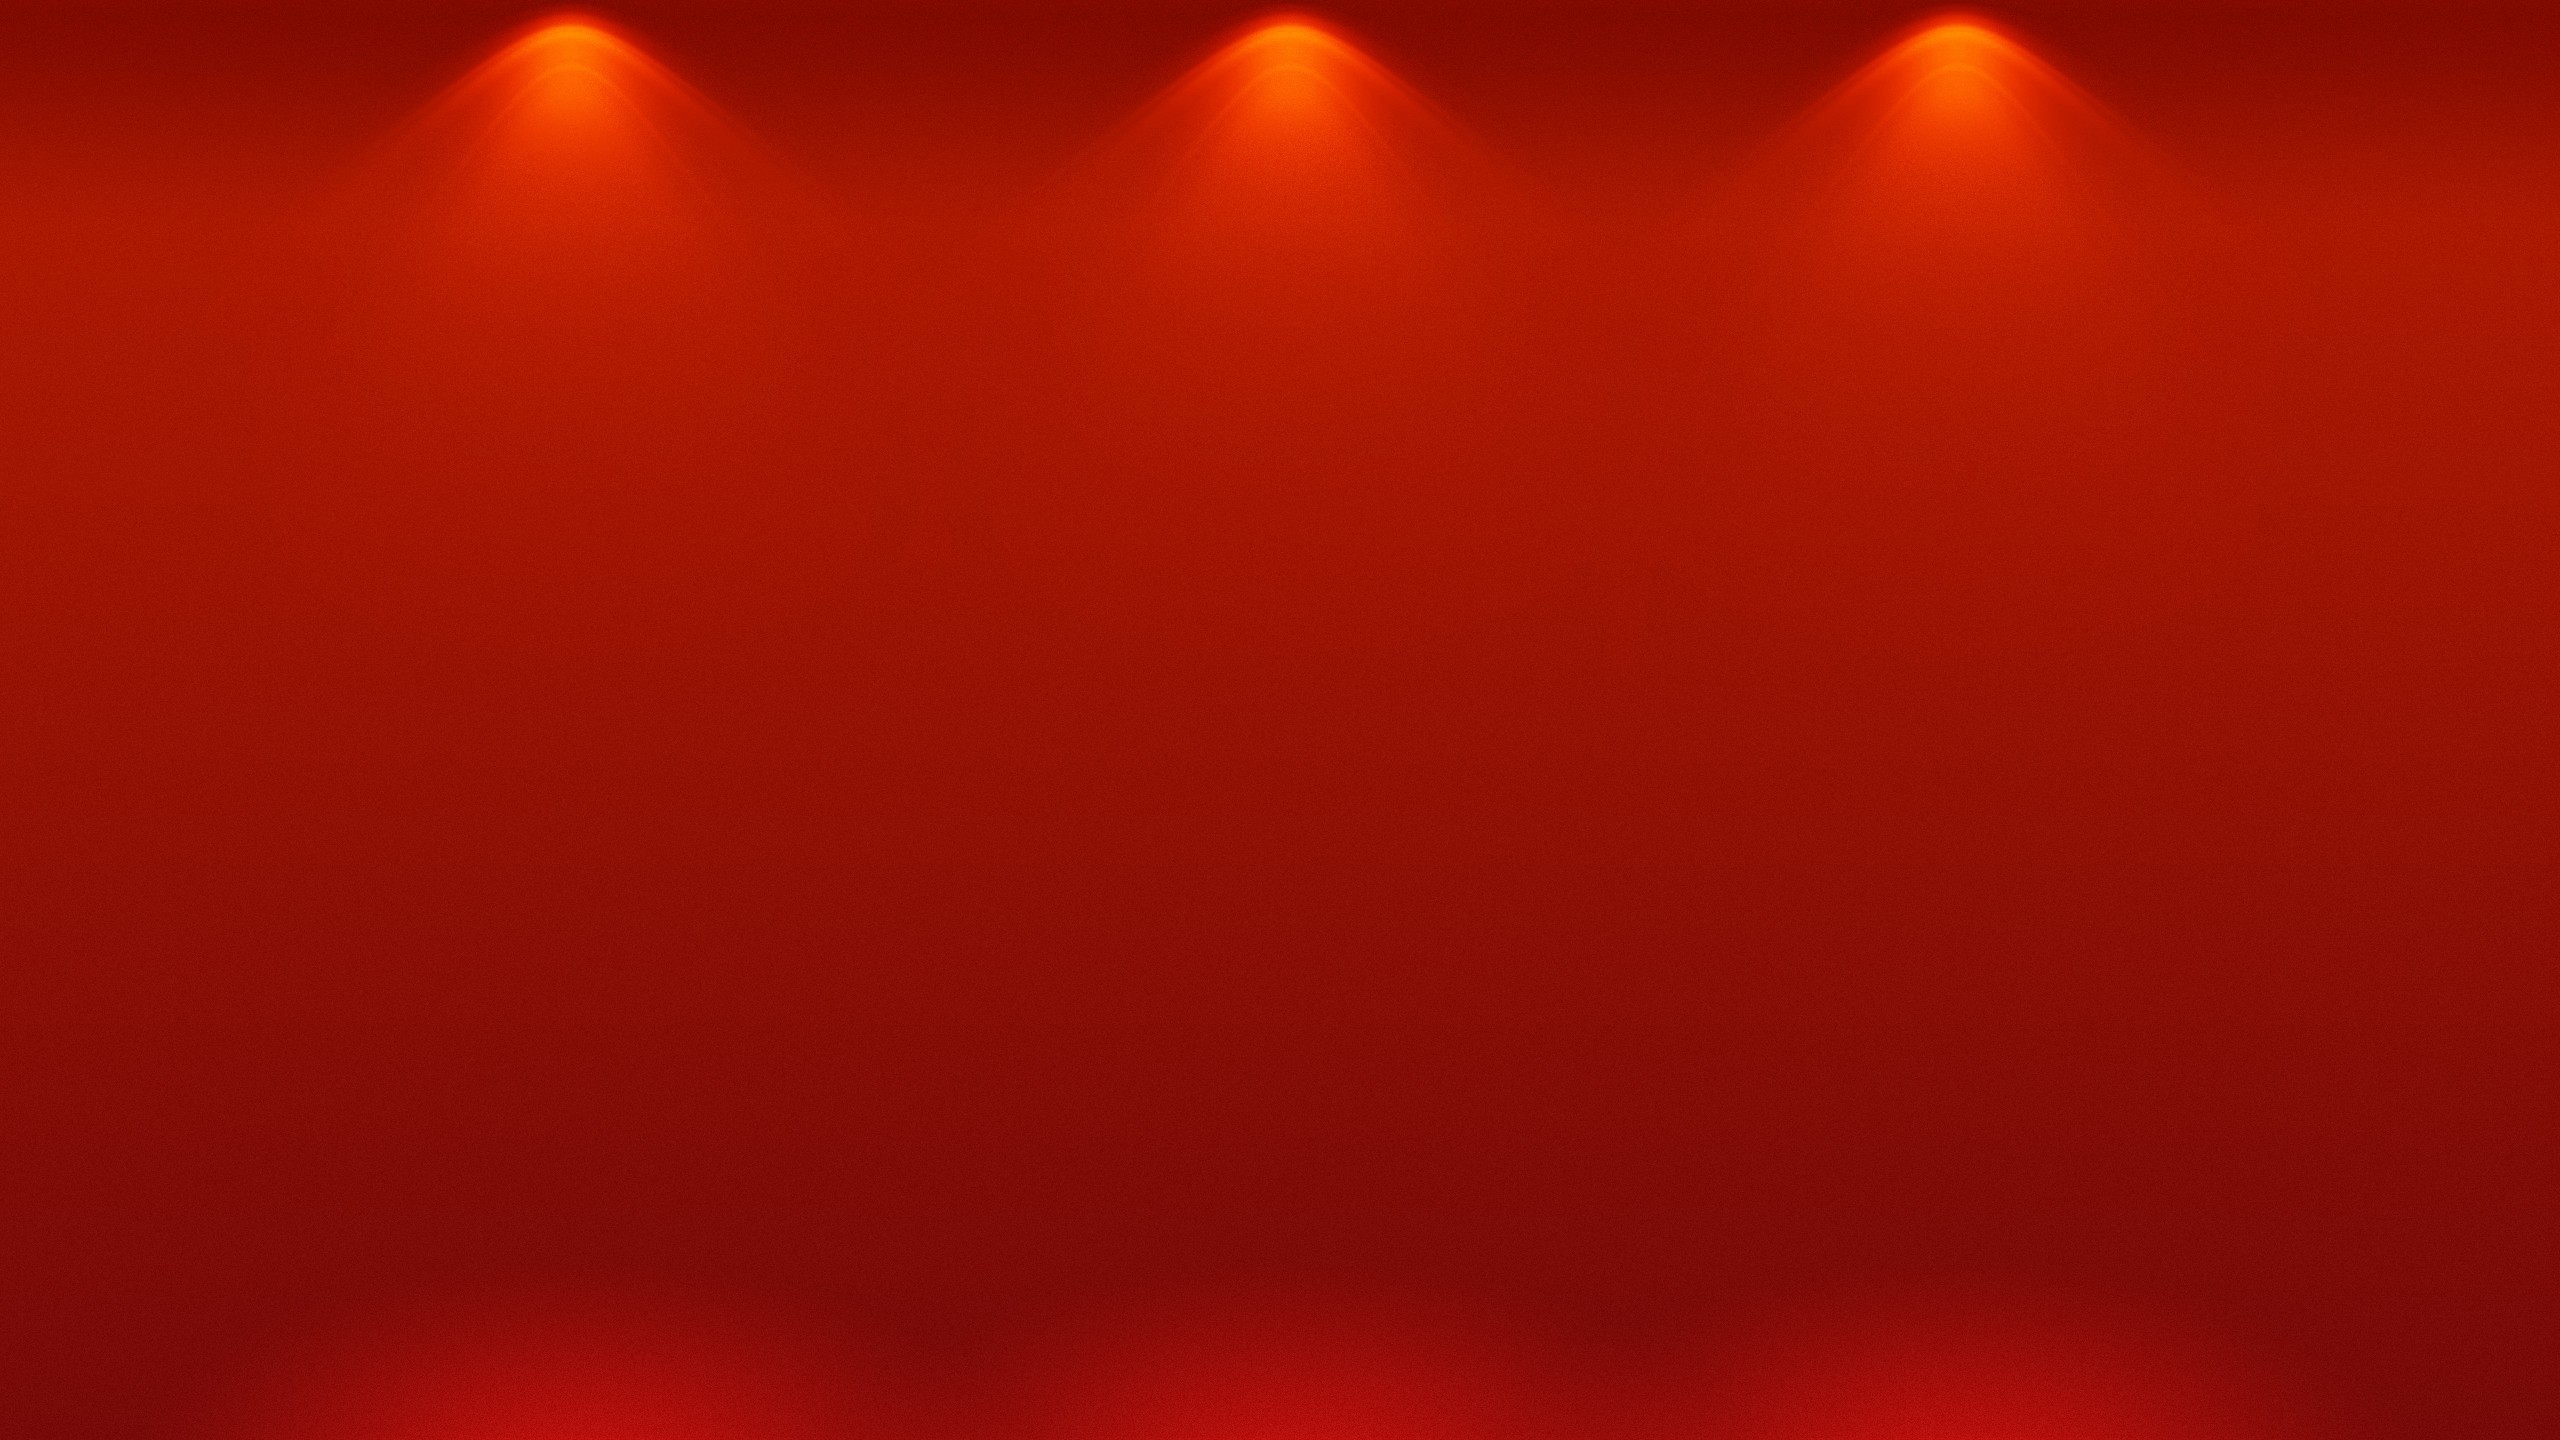 General 2560x1440 lights red background minimalism DeviantArt digital art